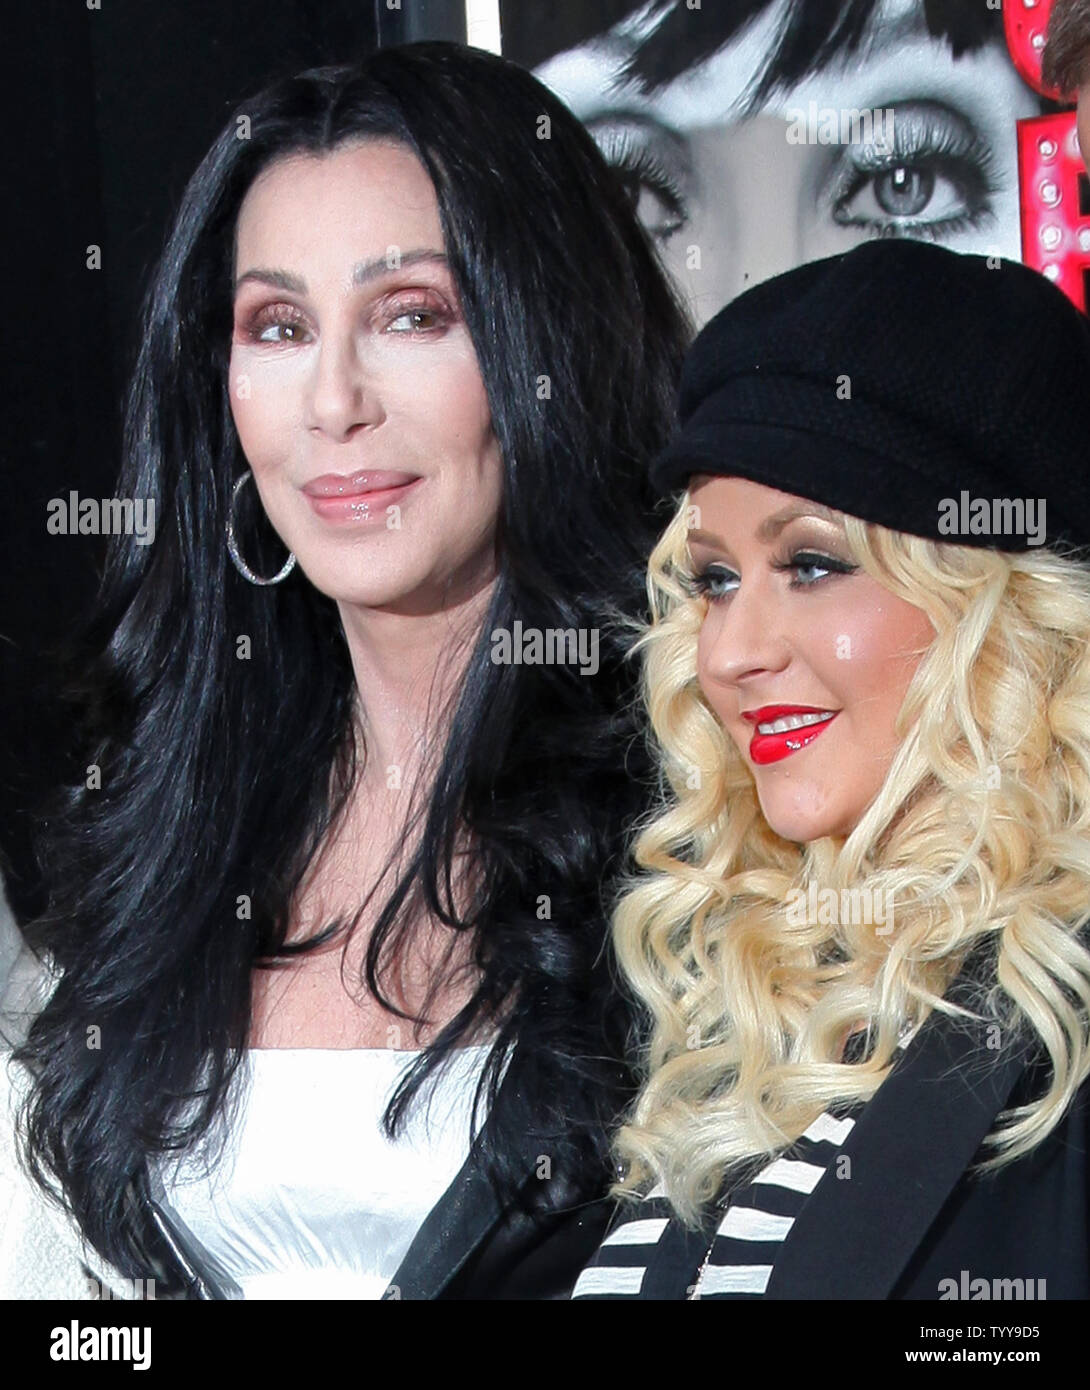 Christina Aguilera: 'Burlesque' Premiere with Cher!: Photo 2495865, Cher,  Christina Aguilera Photos